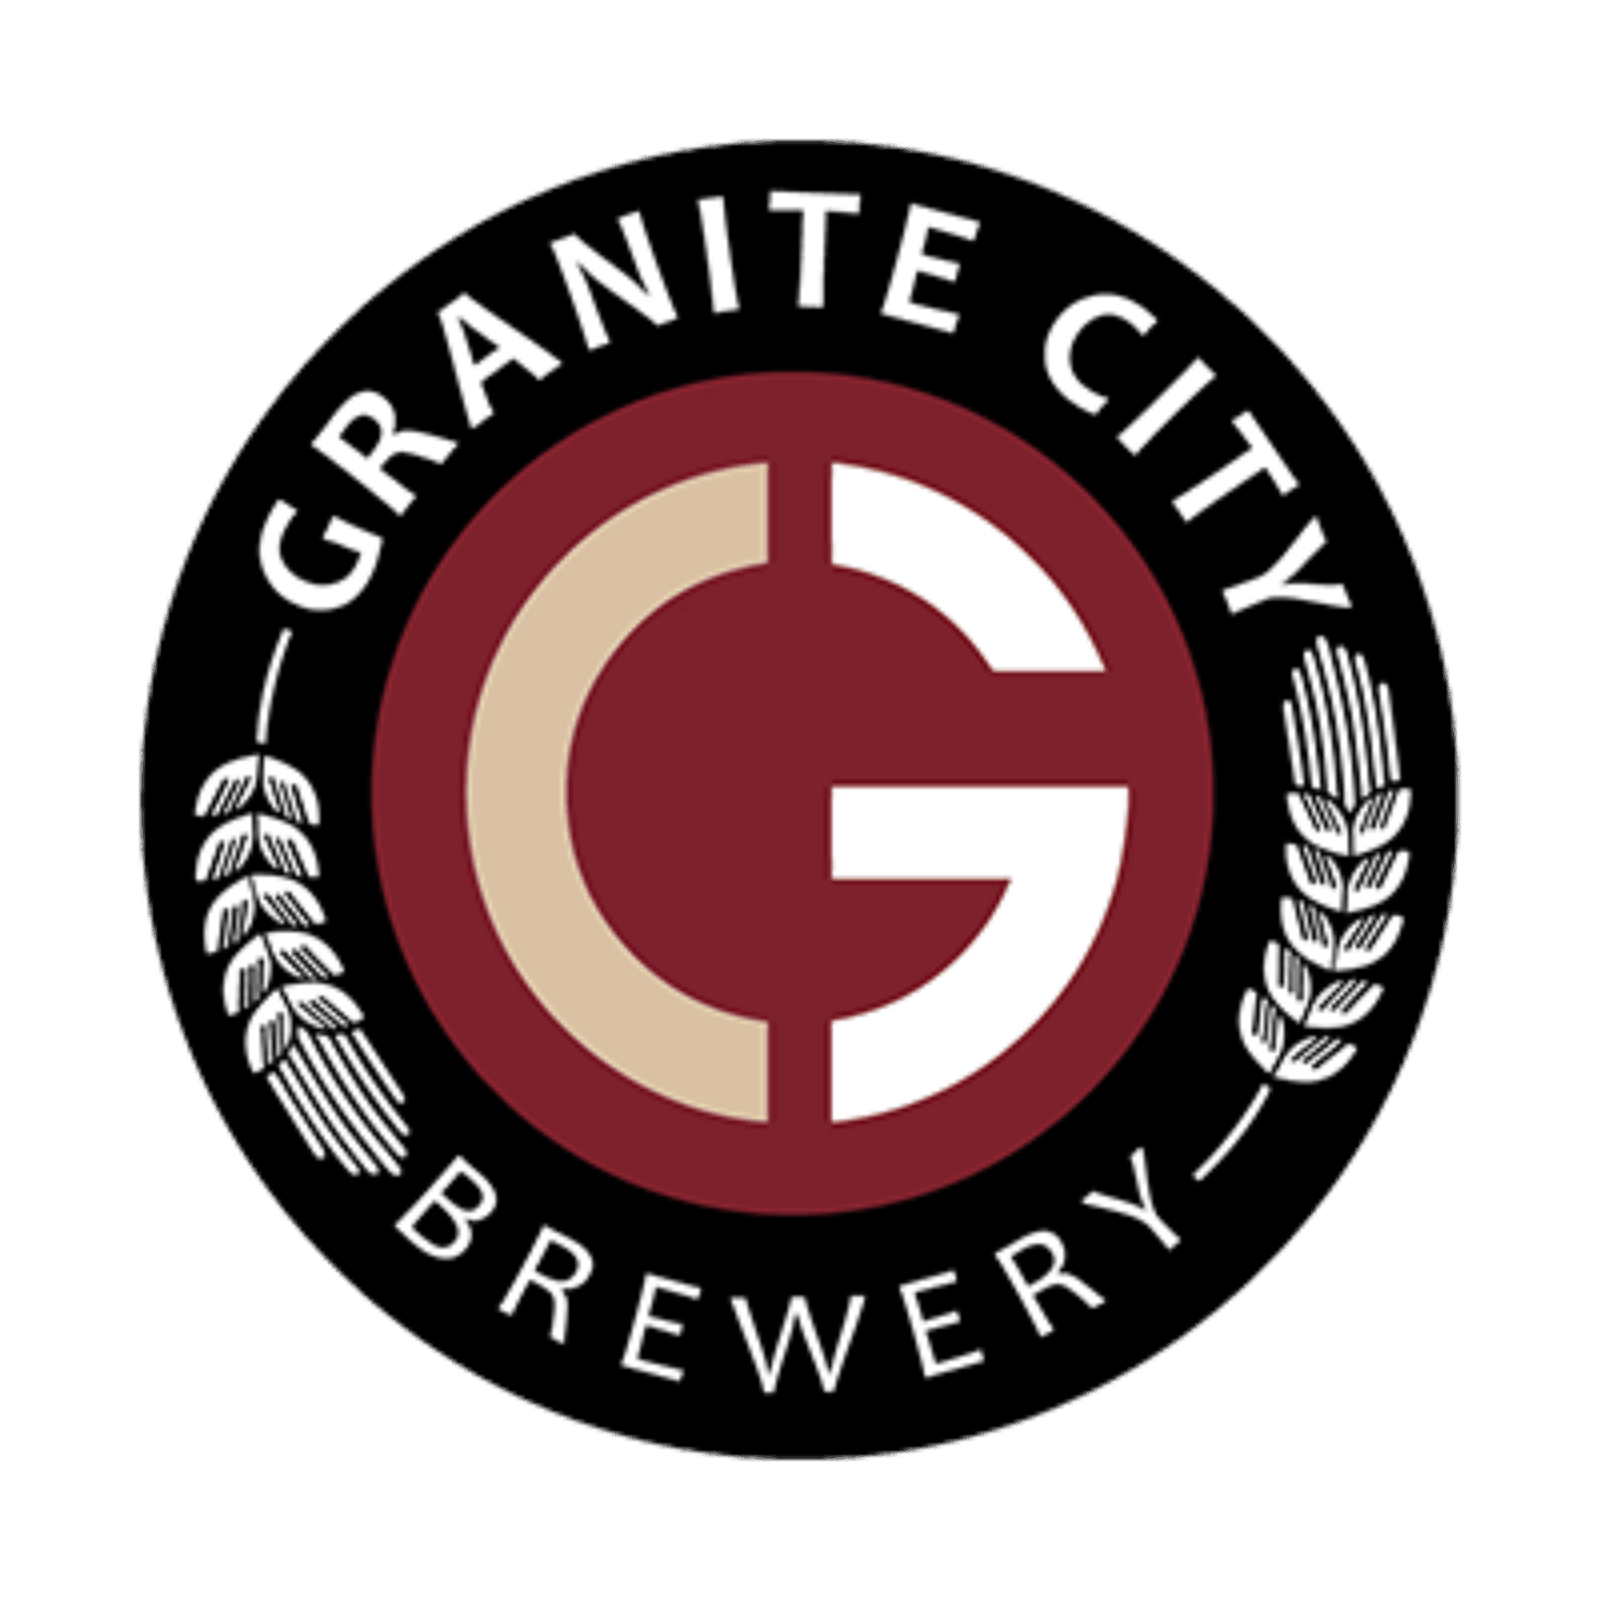 Granite City Brewery Logo